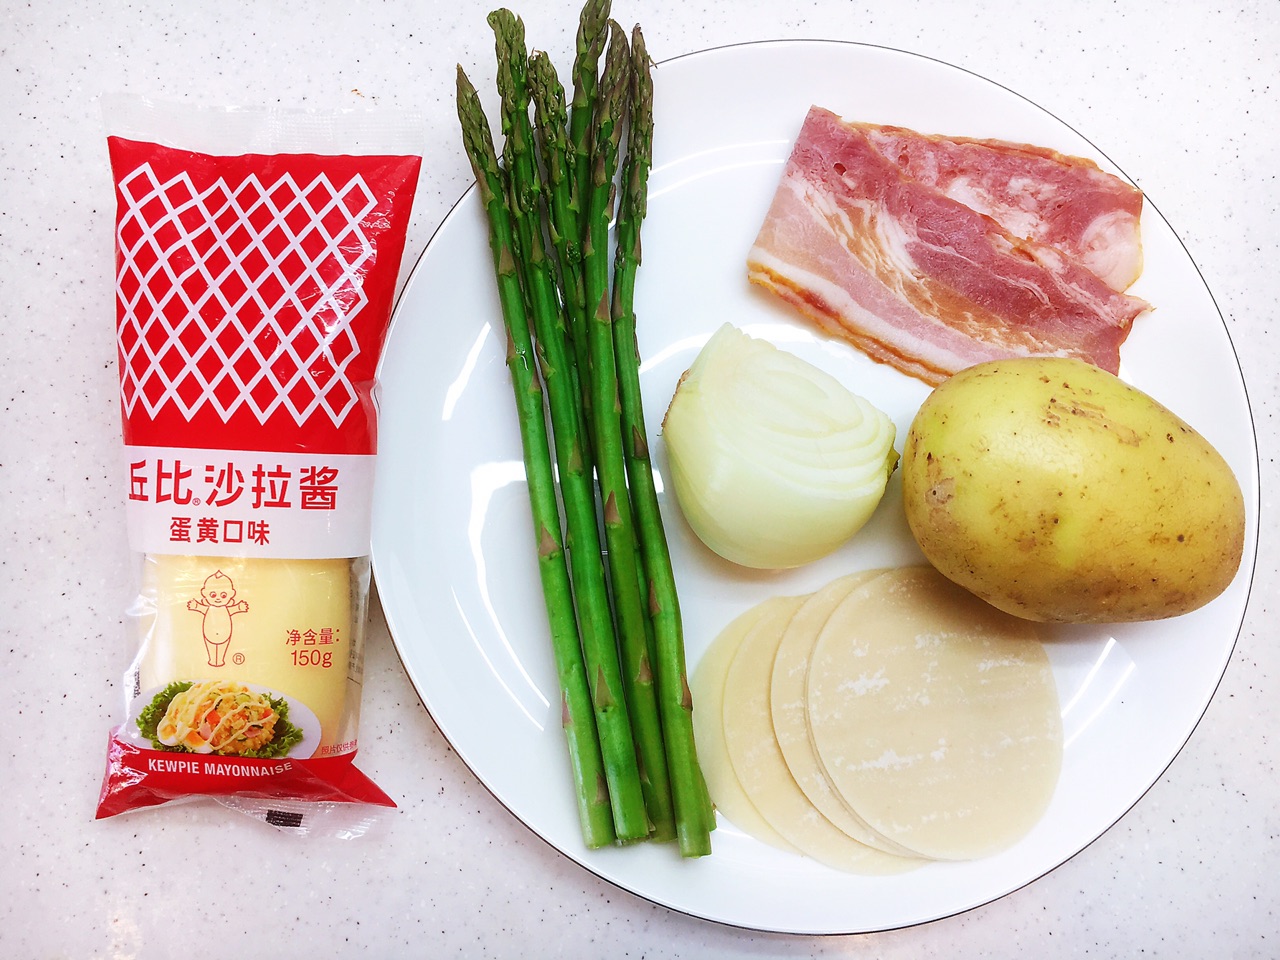 【Prymat波美】简单美食下厨房制作家常菜菜谱——土豆泥培根卷 - 哔哩哔哩